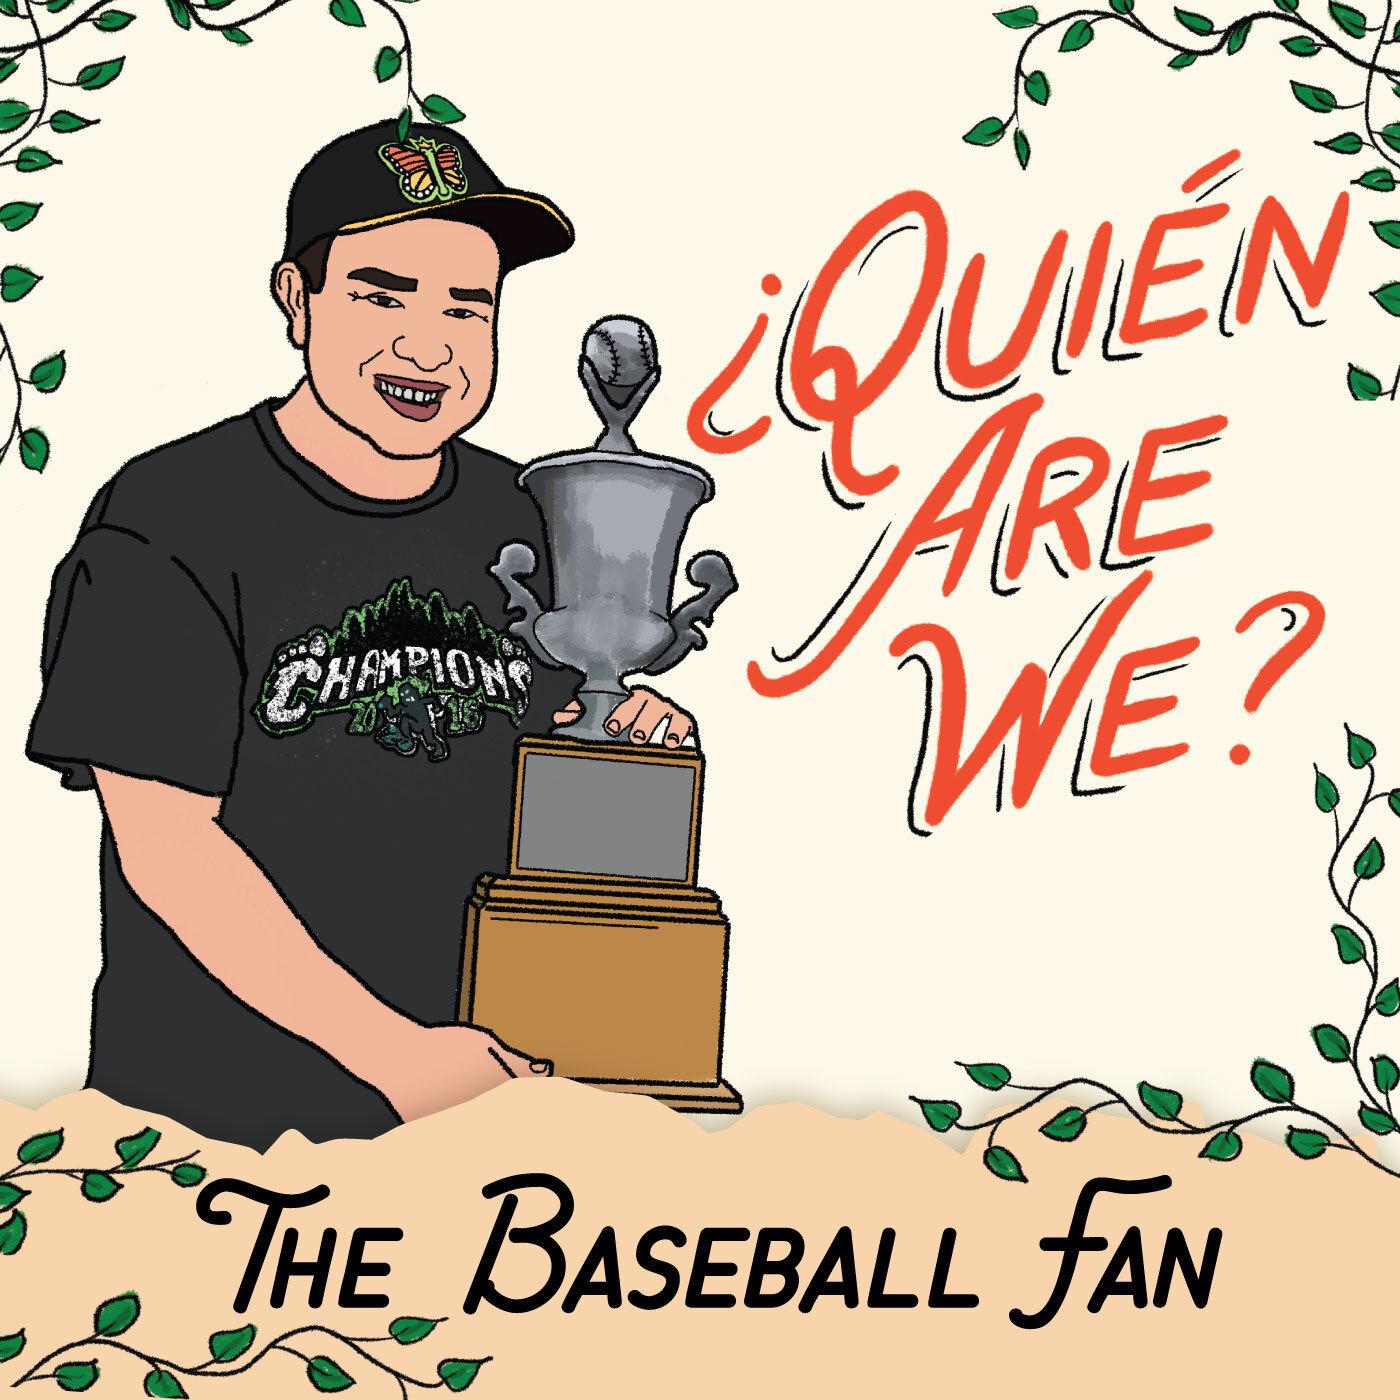 Thumbnail for "The Baseball Fan".